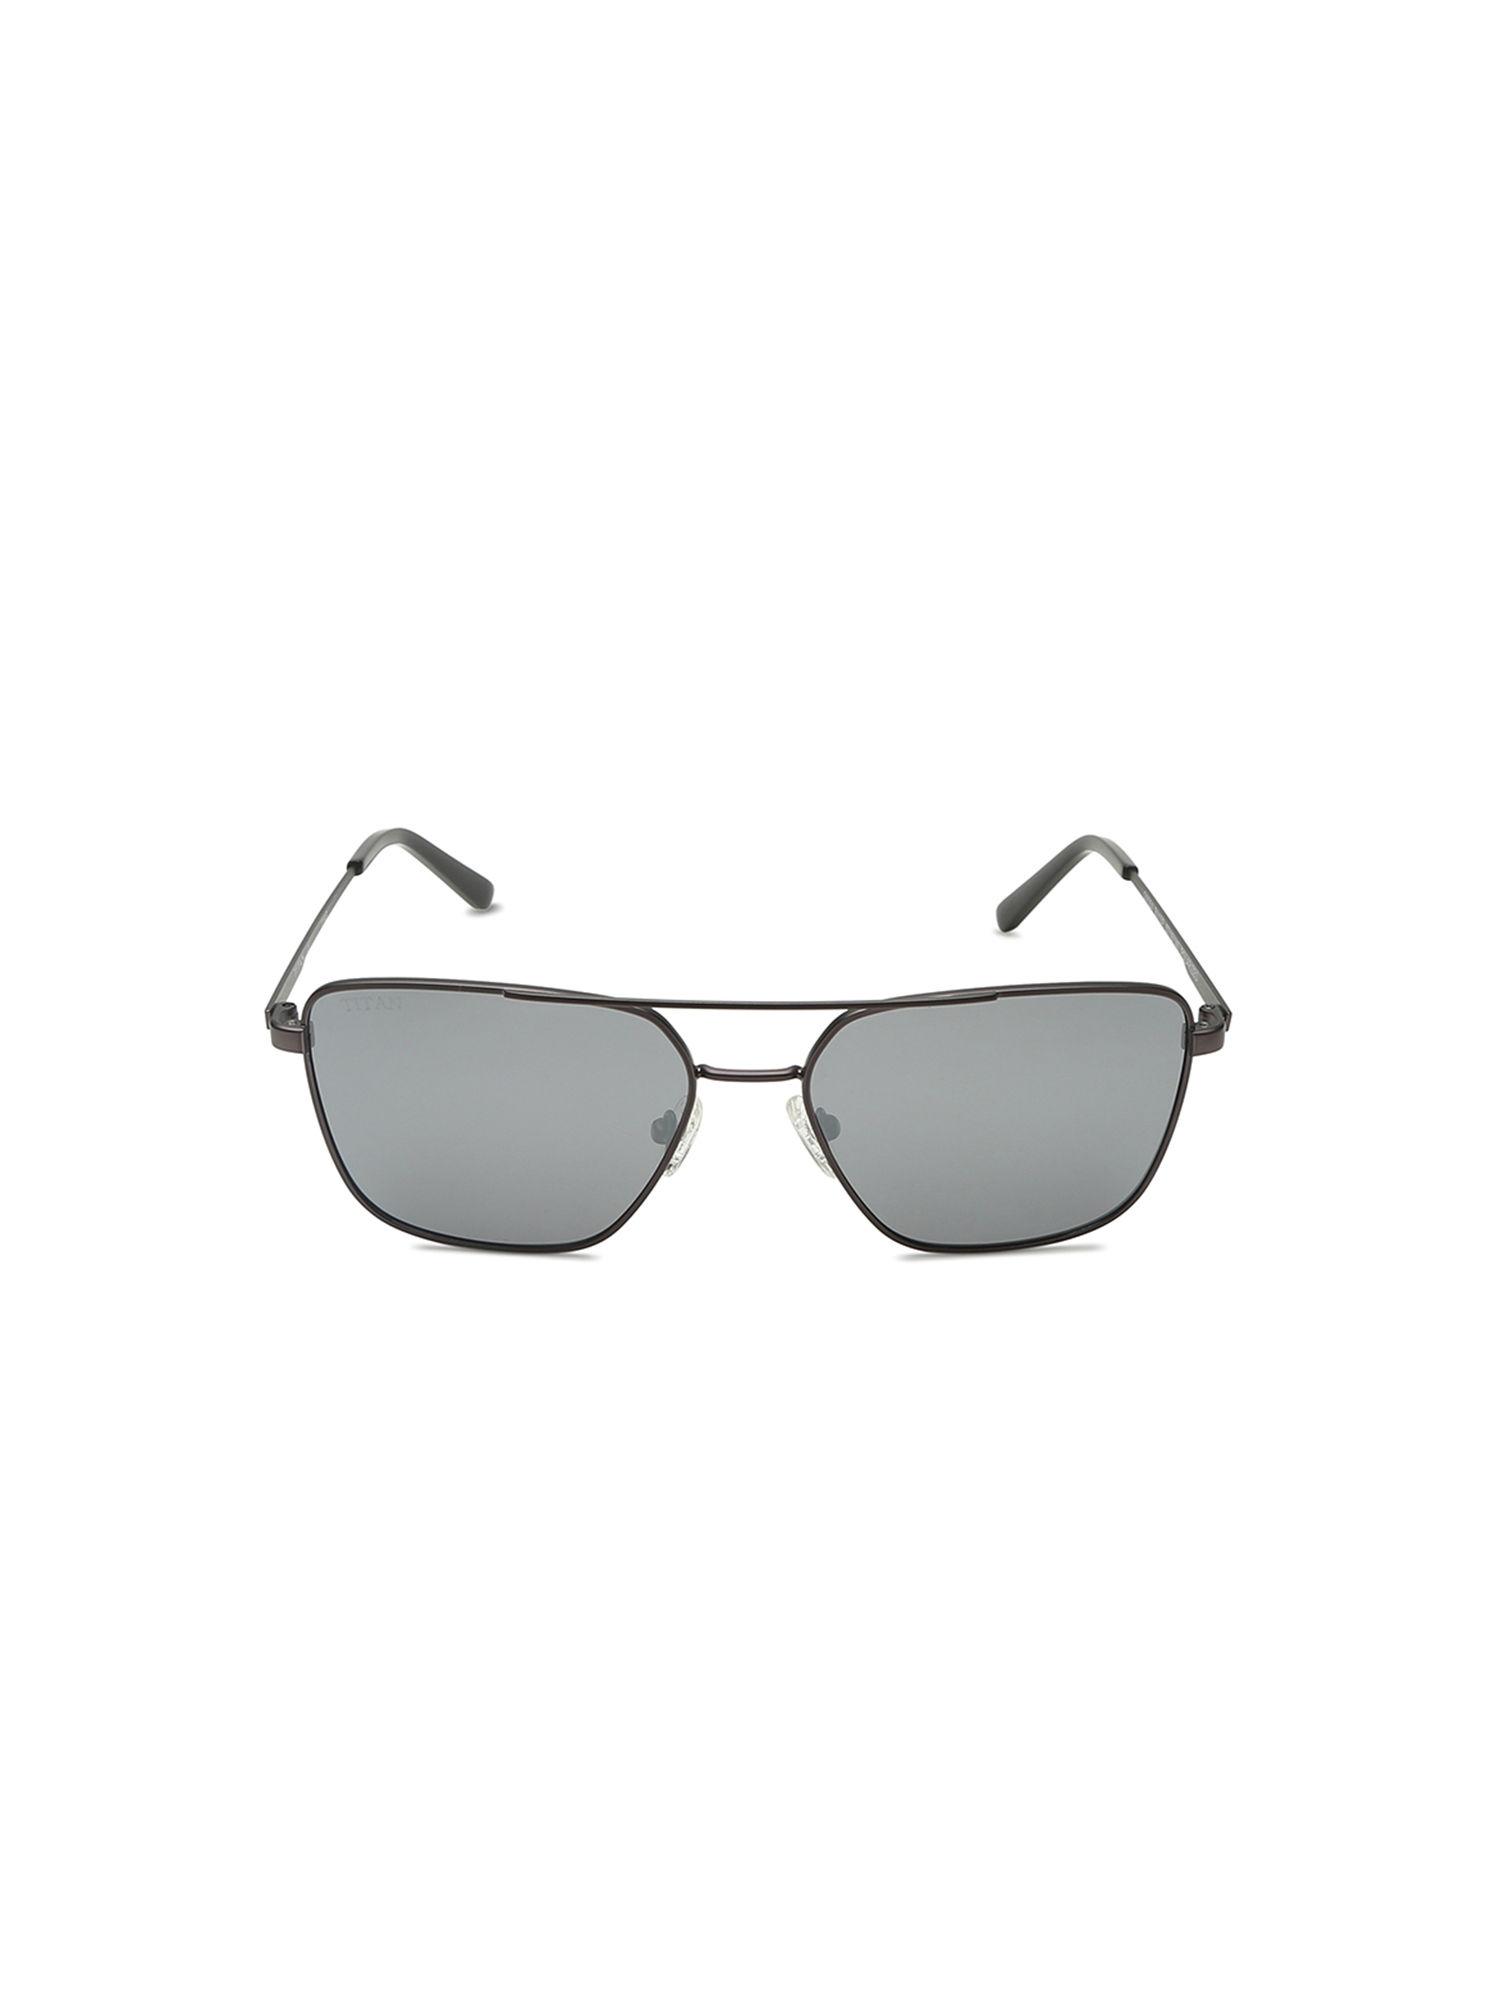 grey square sunglasses (gm354bu1opv)